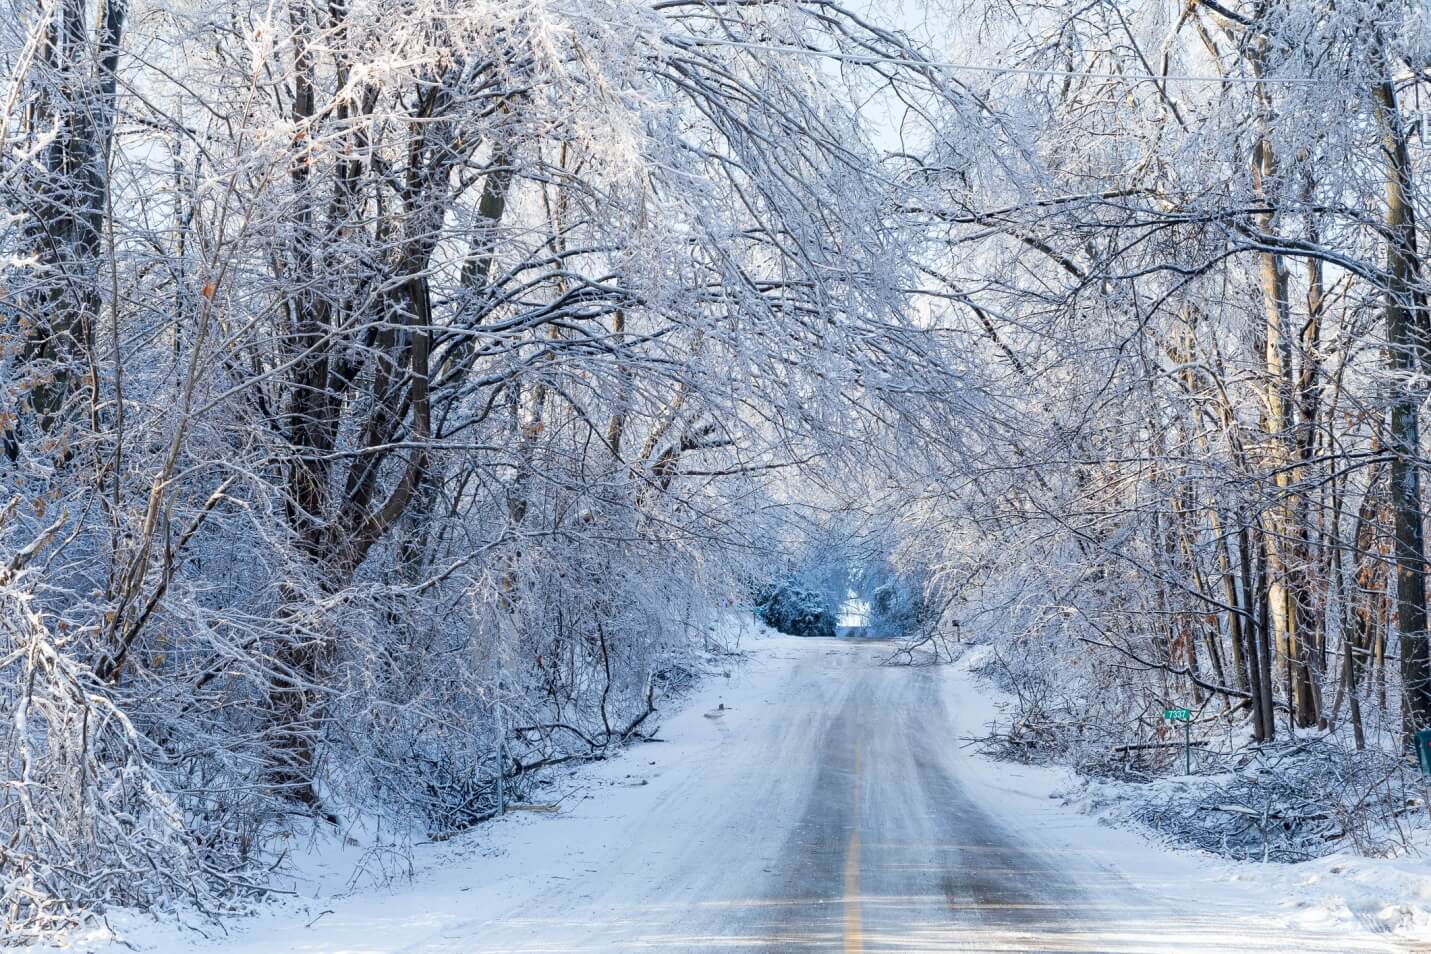 A snowy winter road.